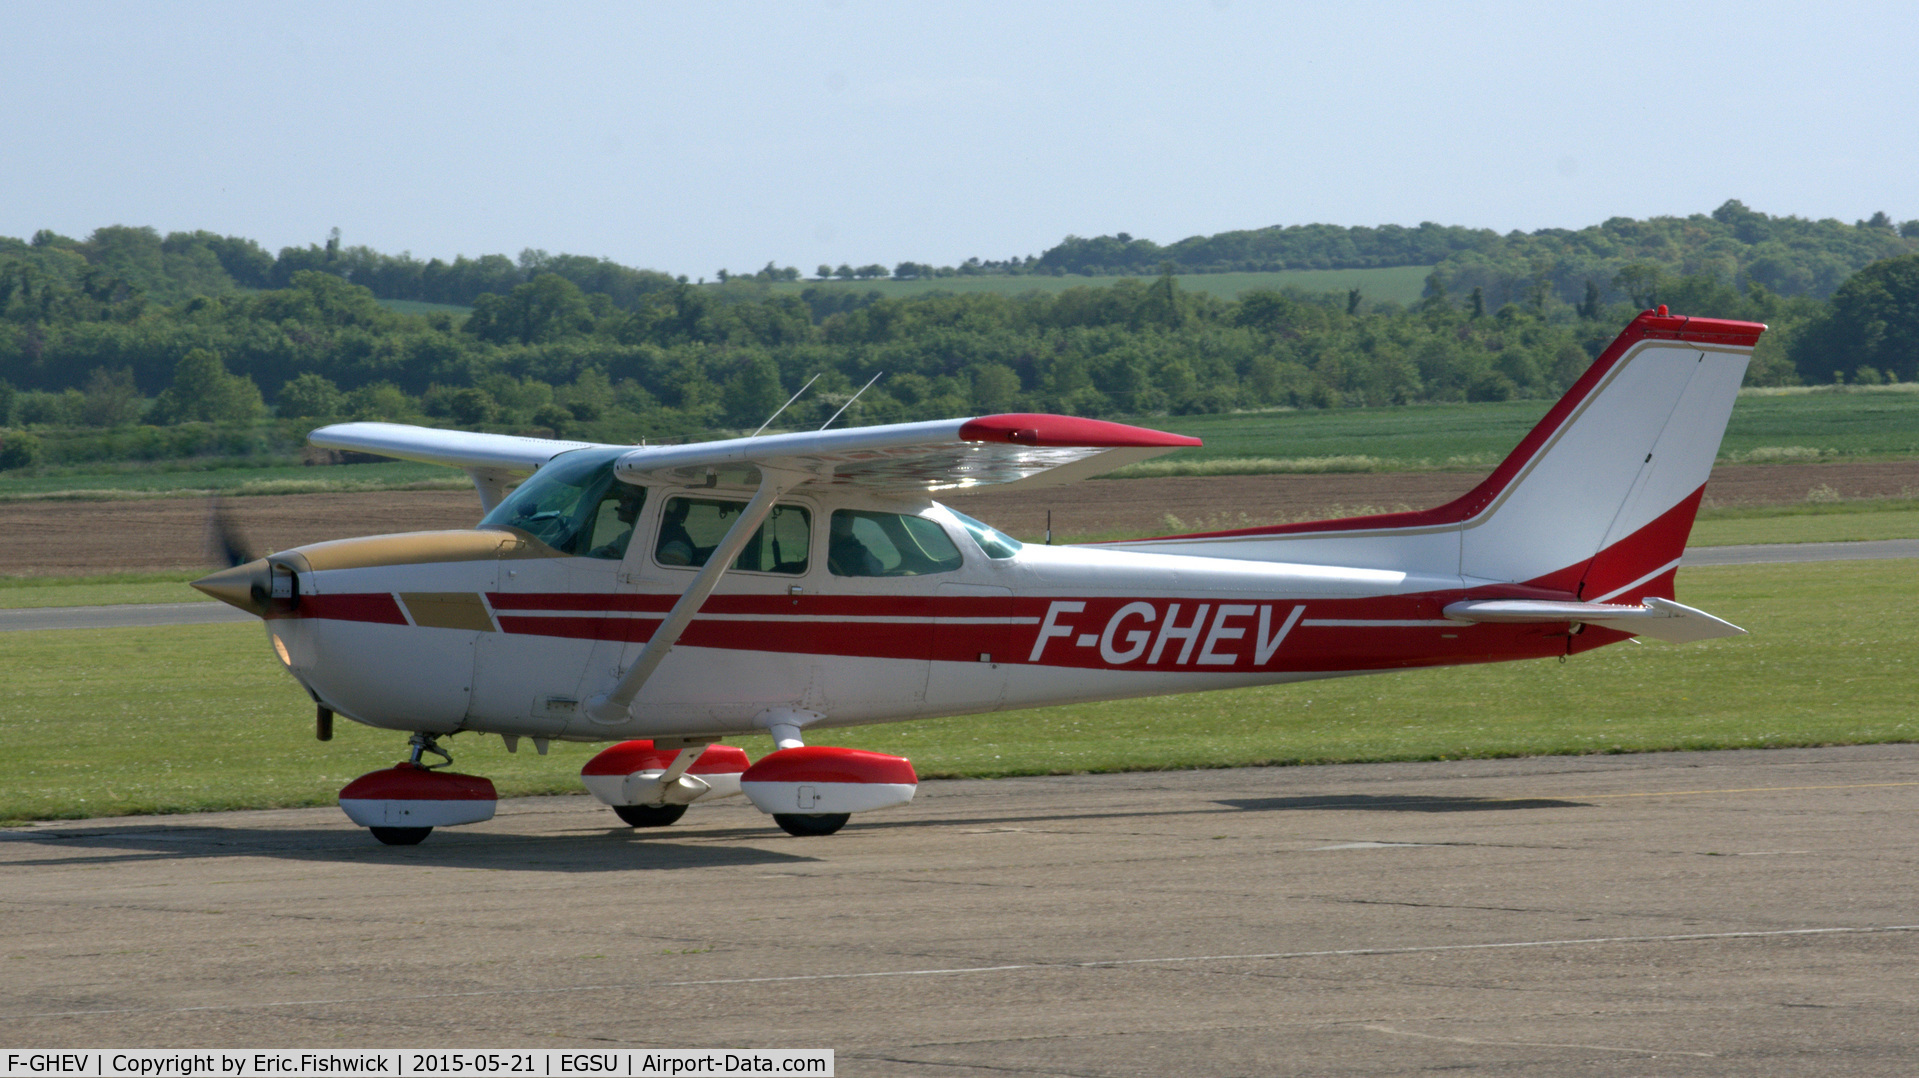 F-GHEV, Reims F172N Skyhawk C/N 172-69730, 3. F-GHEV at Duxford Airfield.